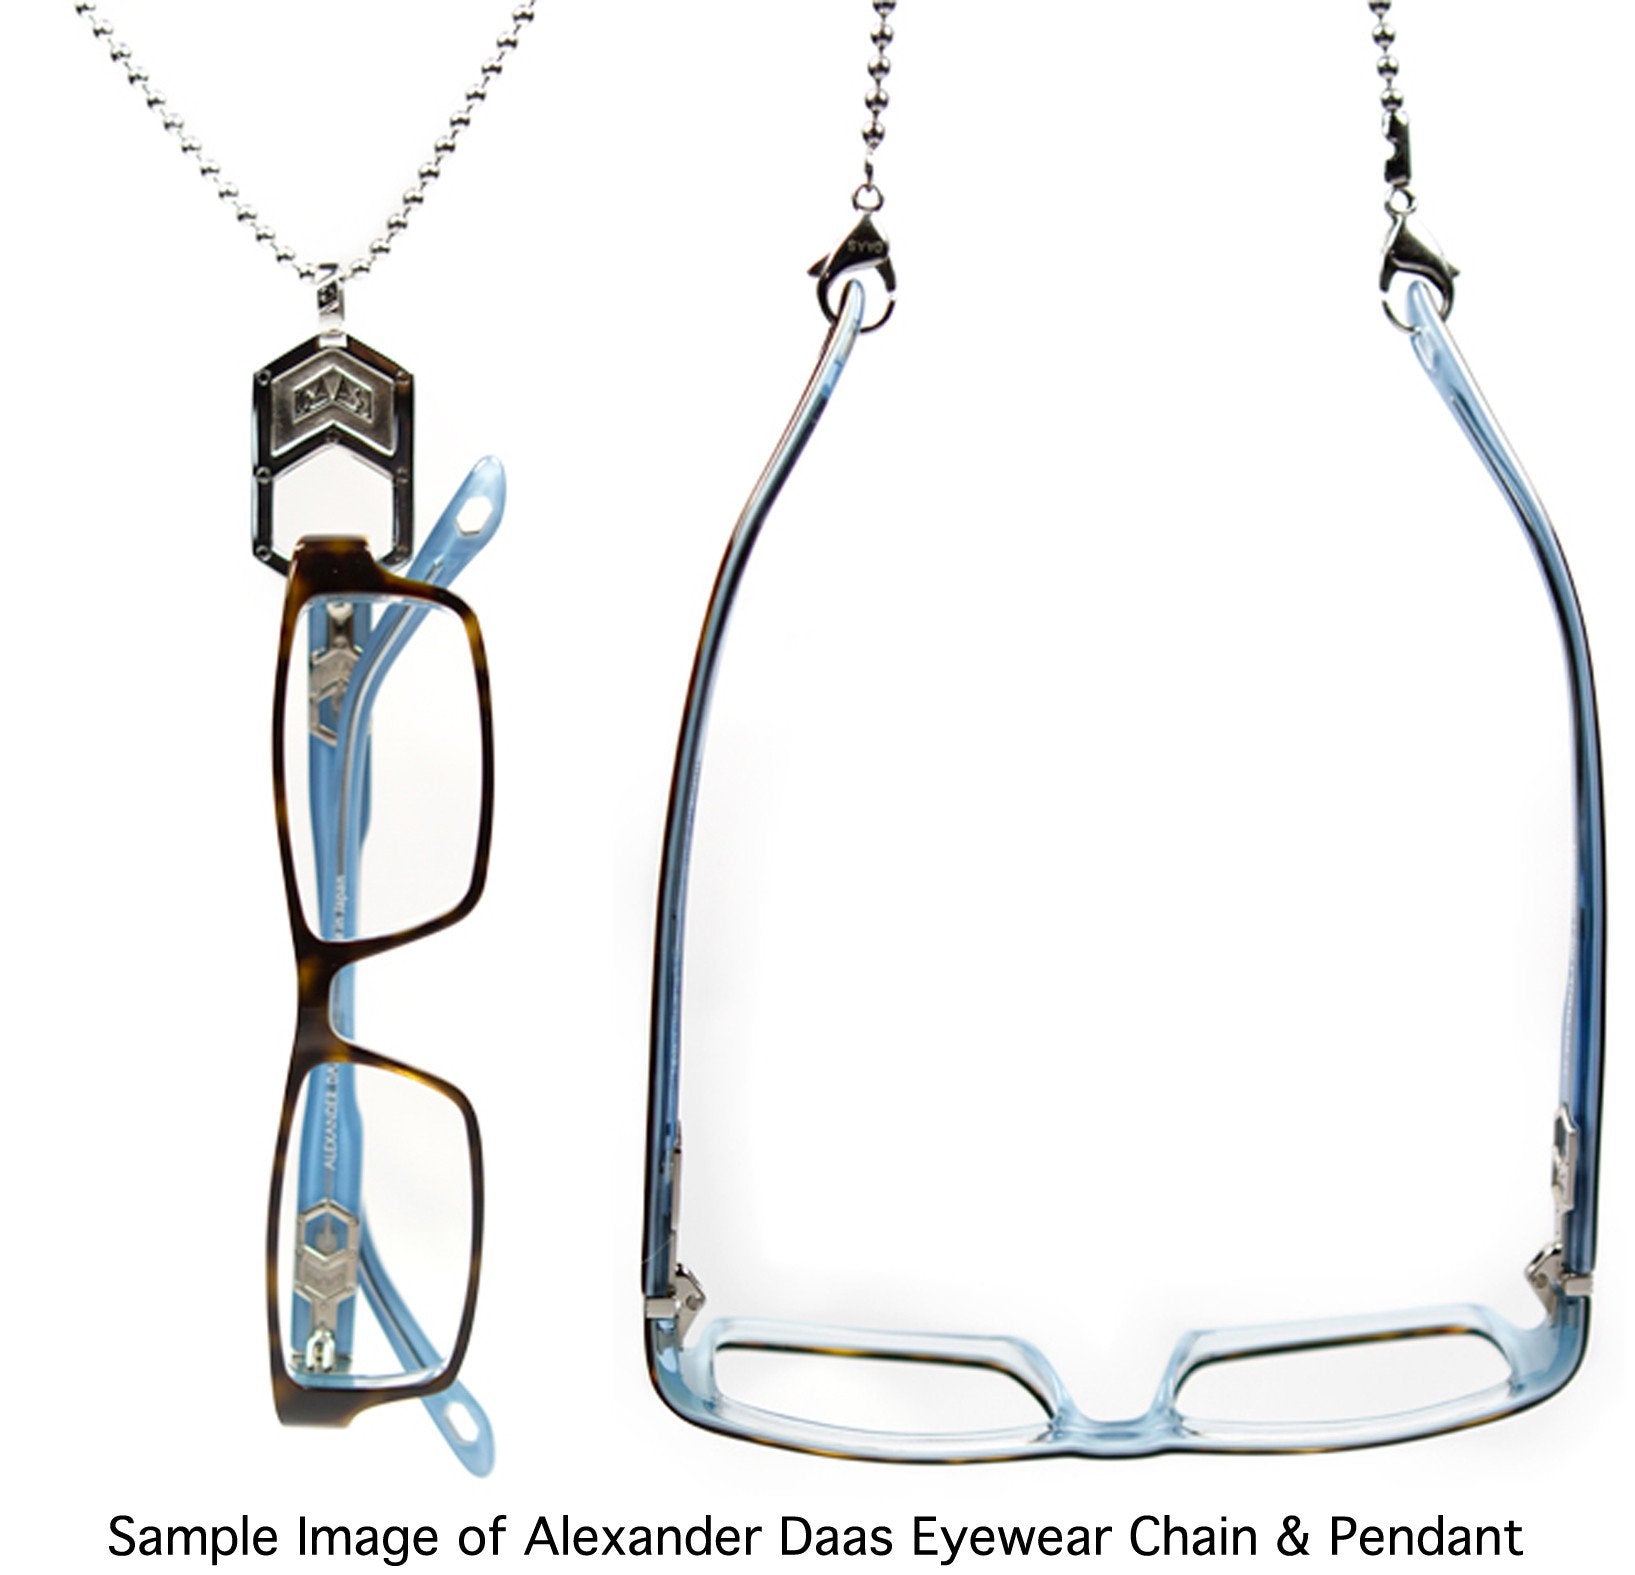 Alexander Daas - Kingdom Sunglasses - Sample Image of Eyewear Chain & Pendant Accessories